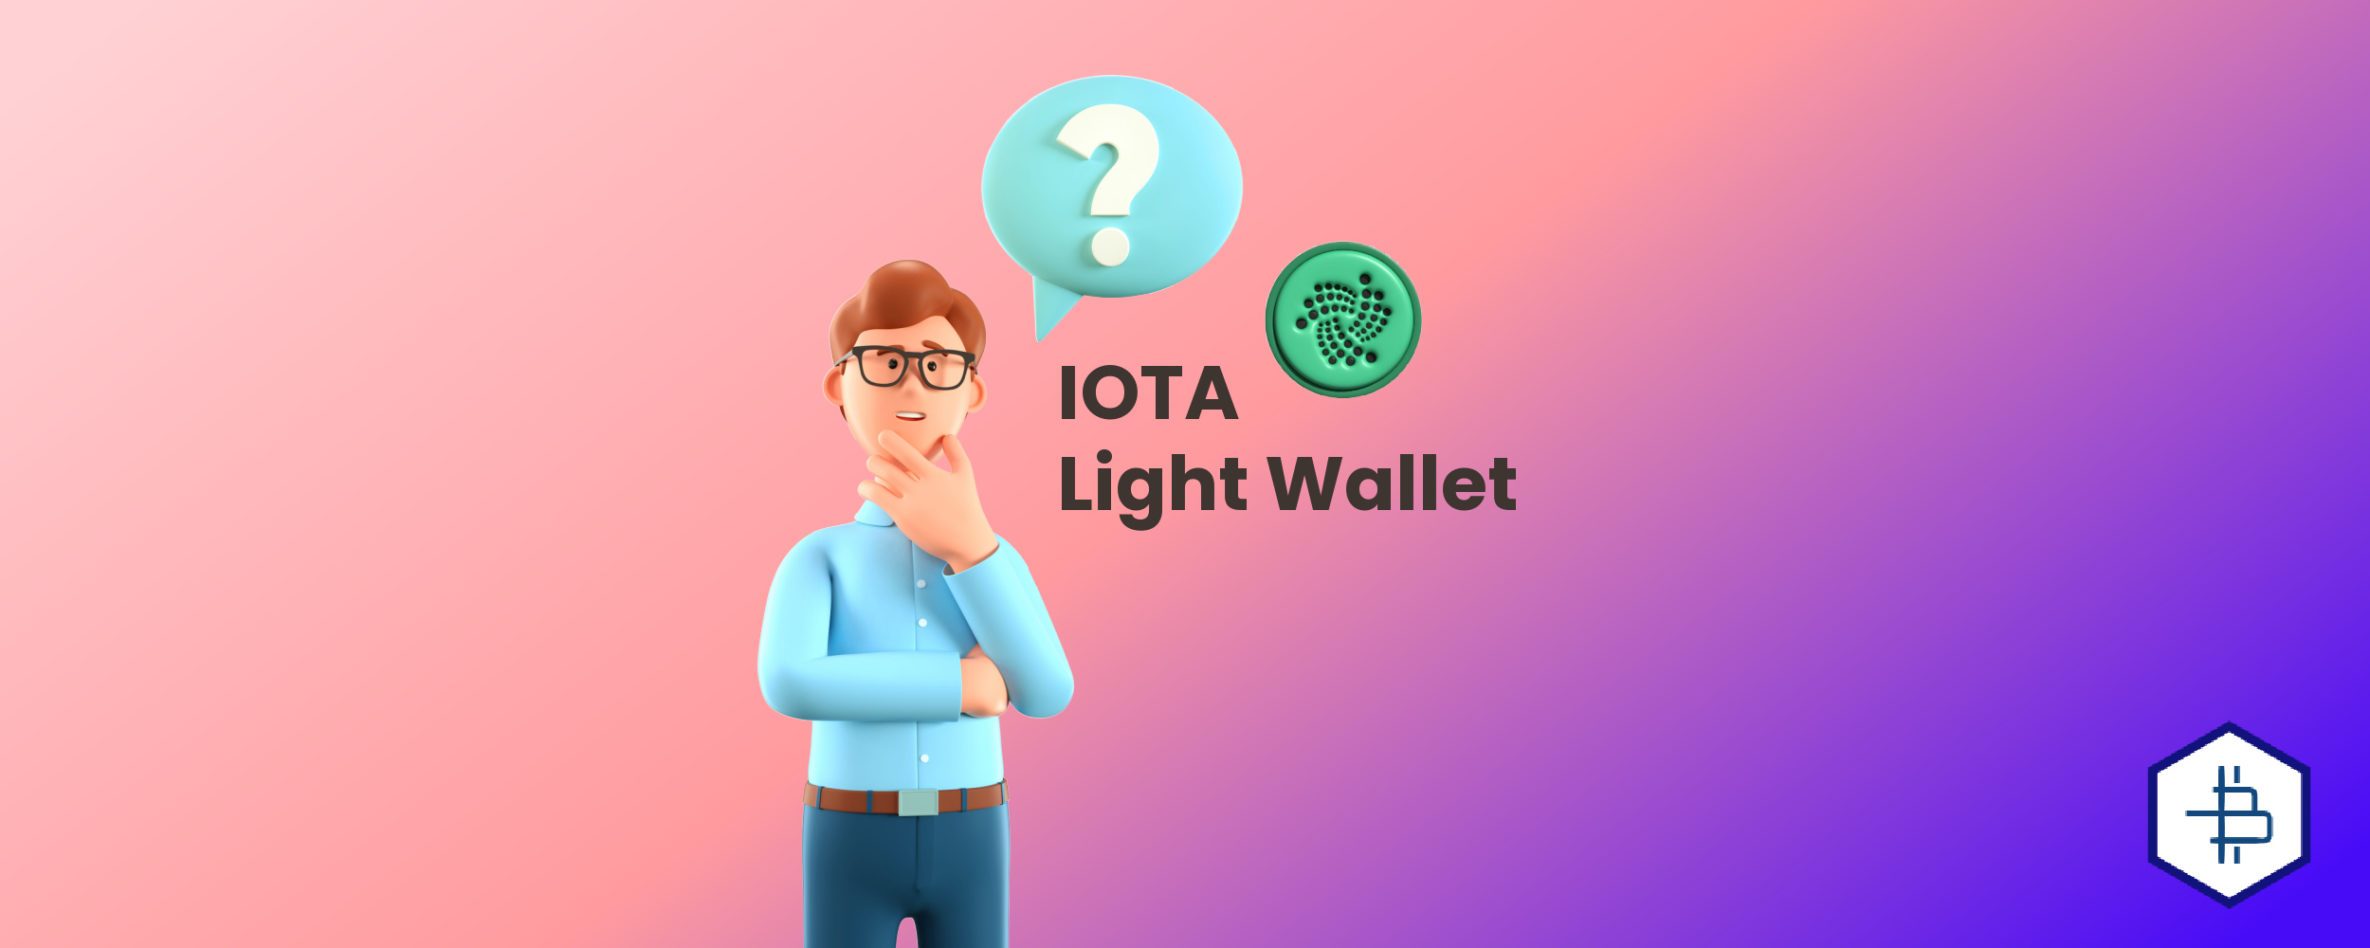 IOTA Light Wallet